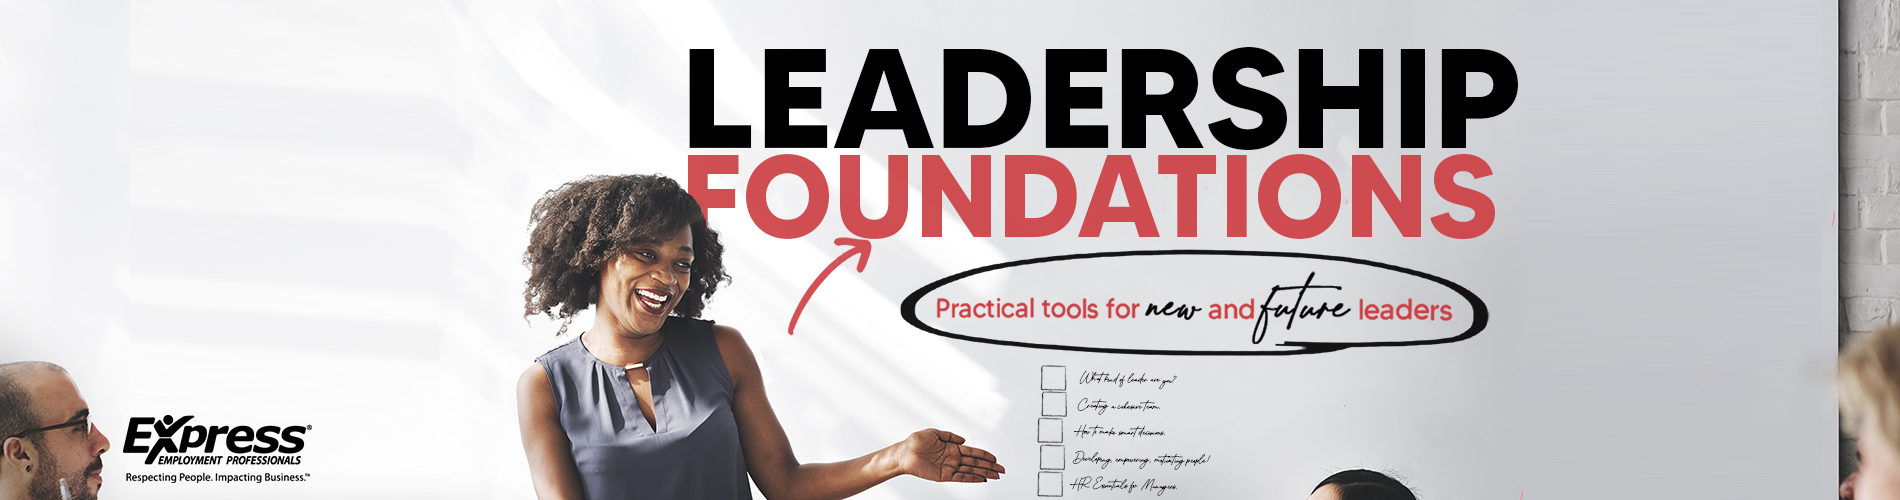 Leadership Foundations Banner Image